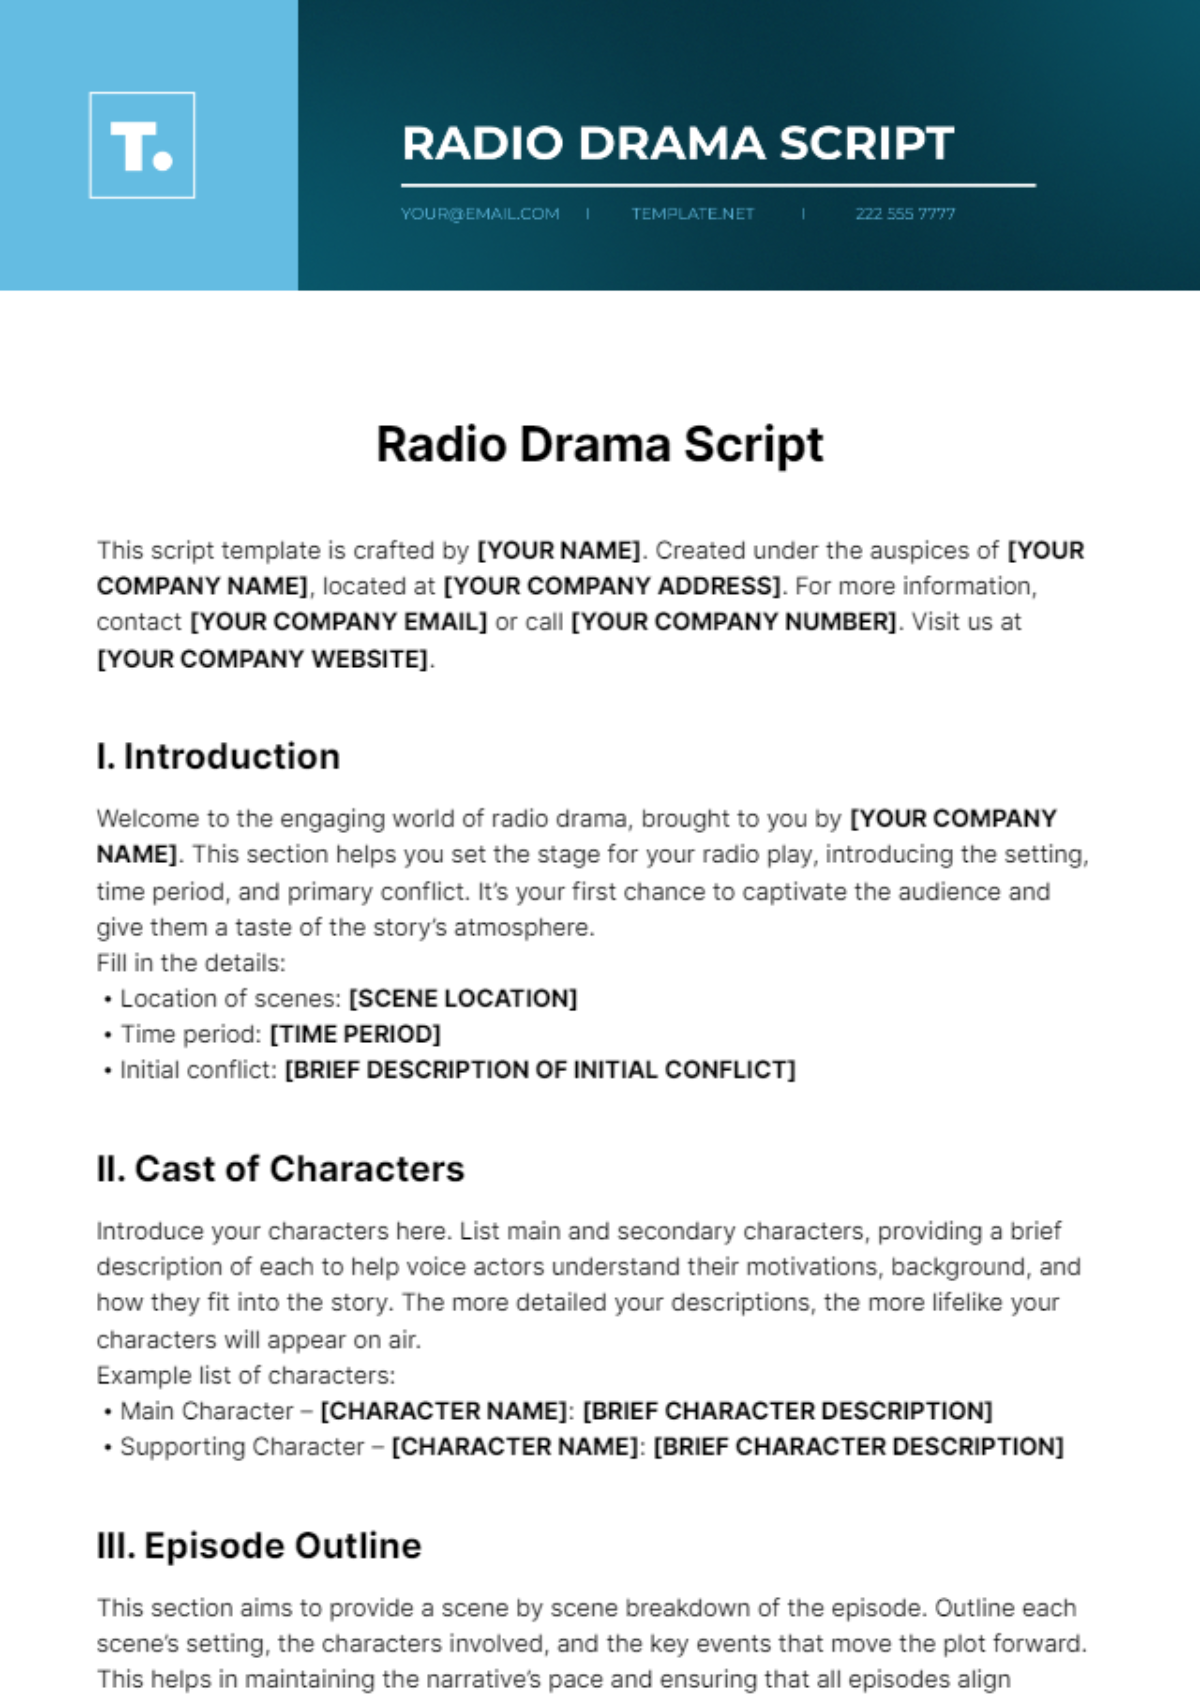 Radio Drama Script Template